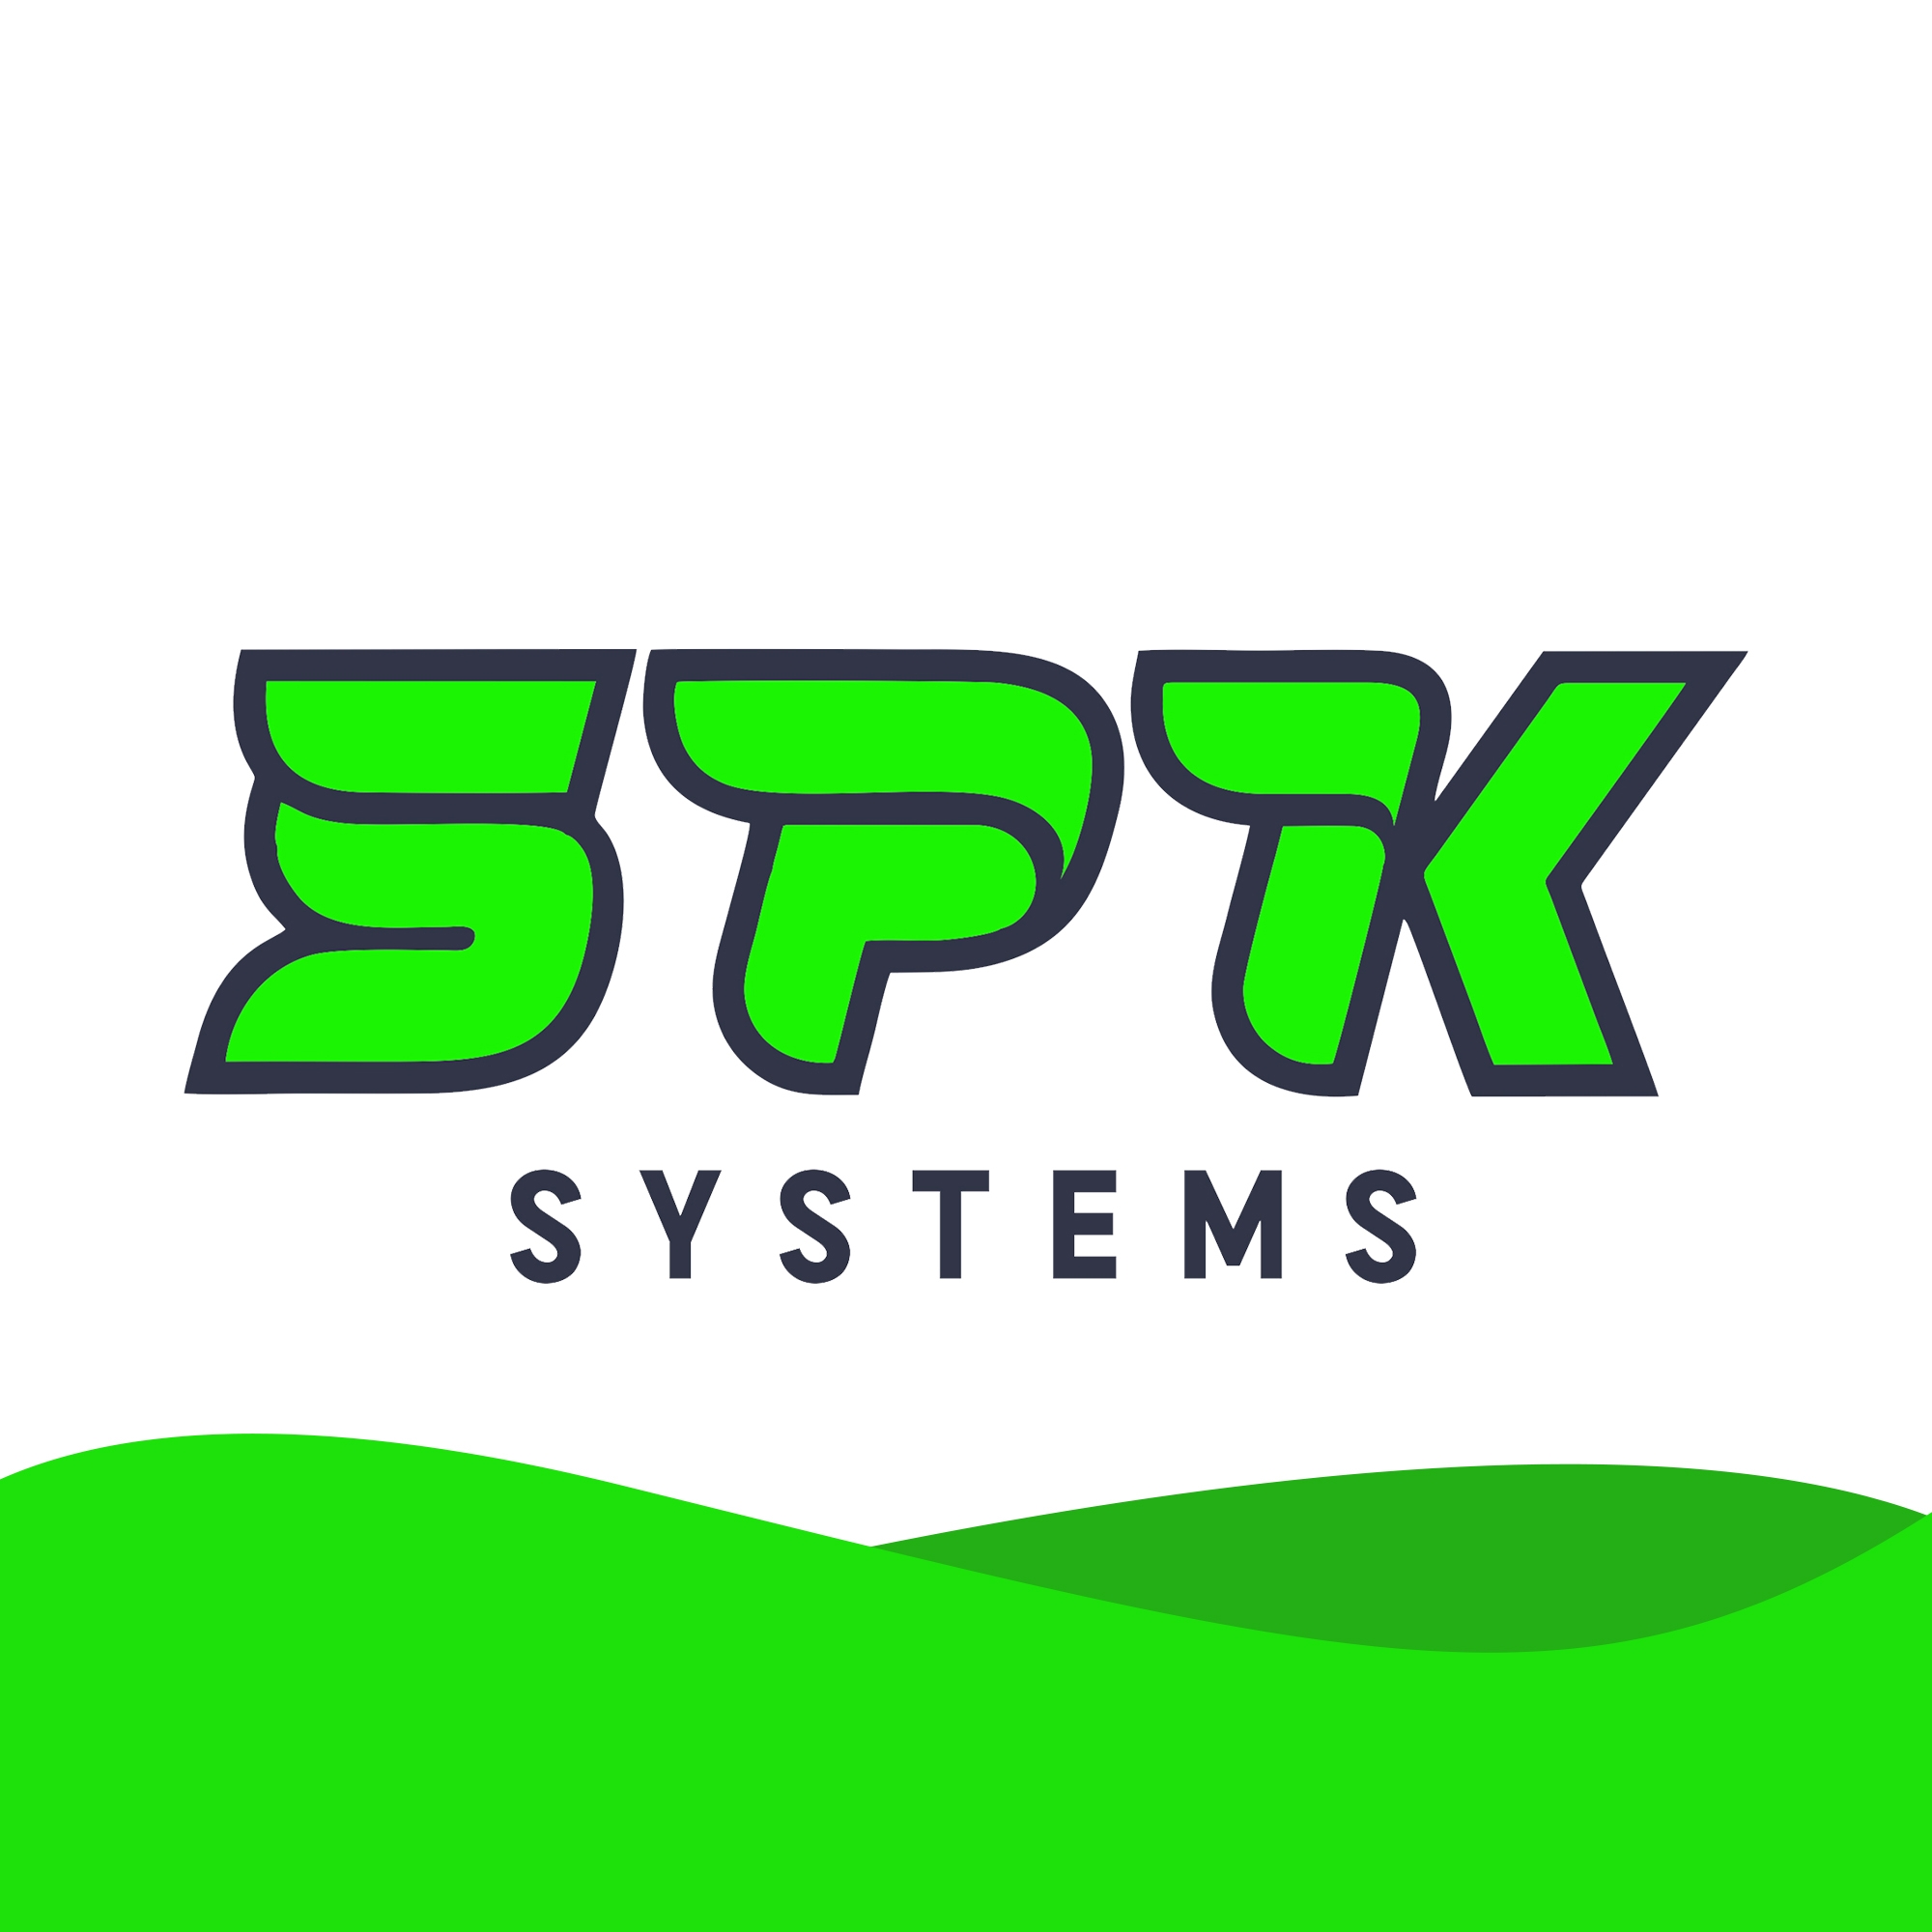 SPK Systems